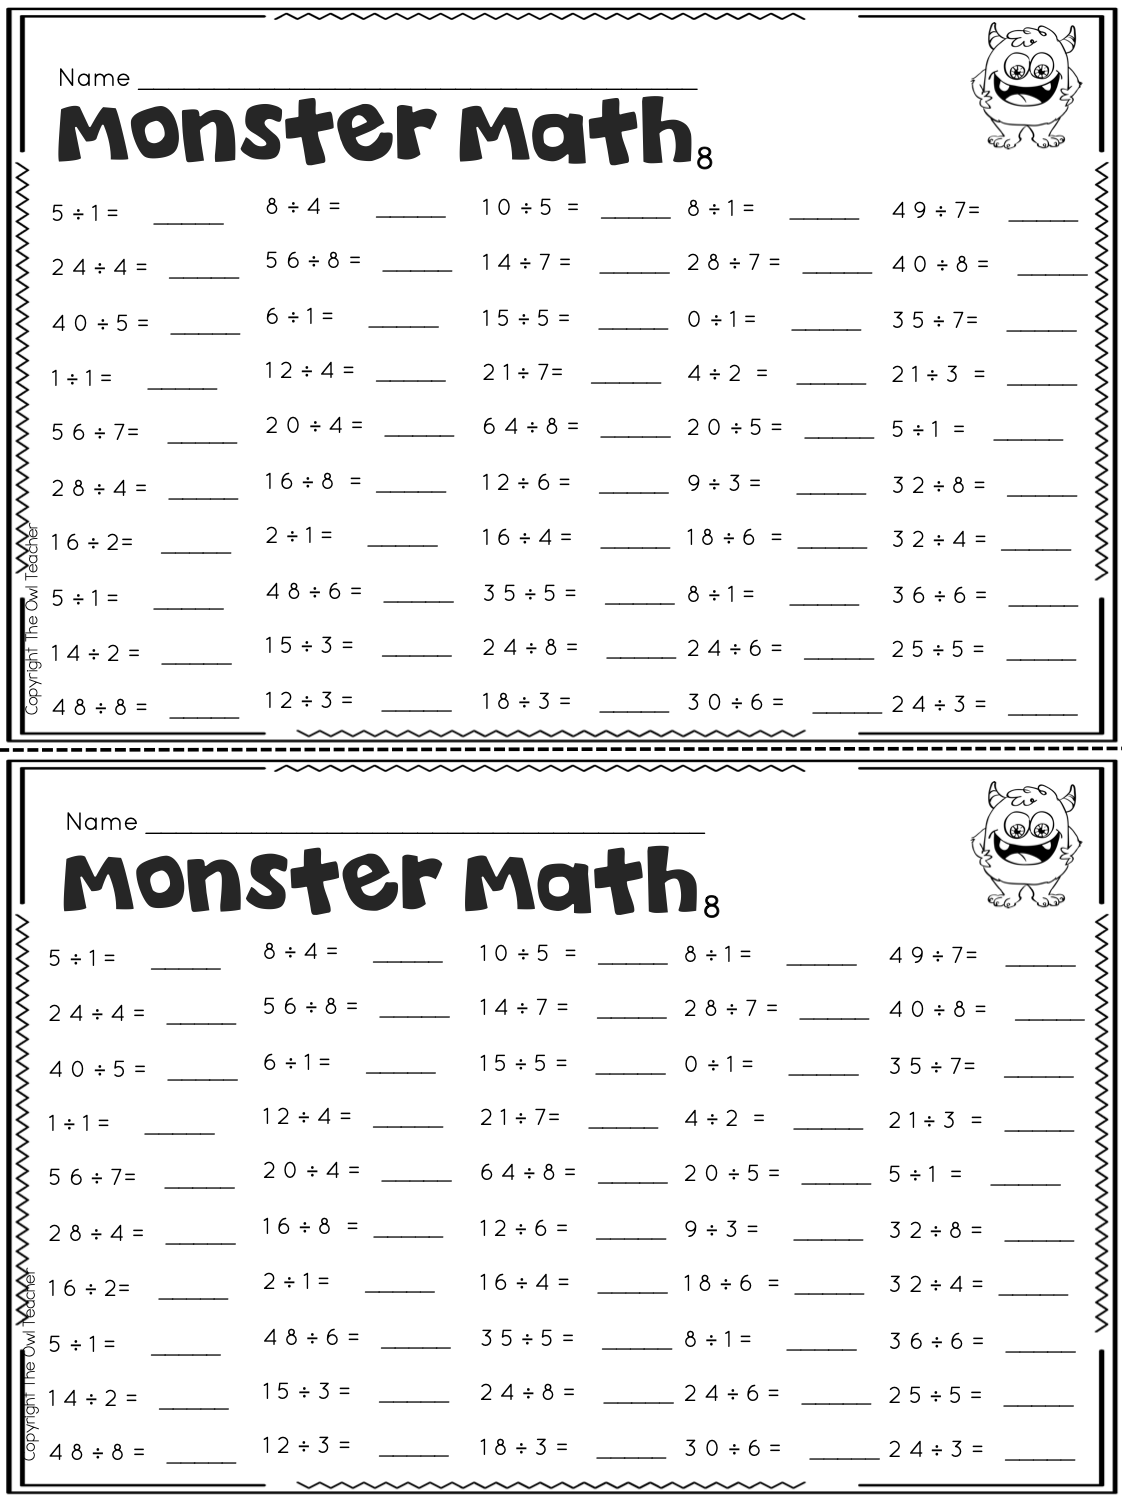 Multiplication Fluency Worksheet 3 And 4